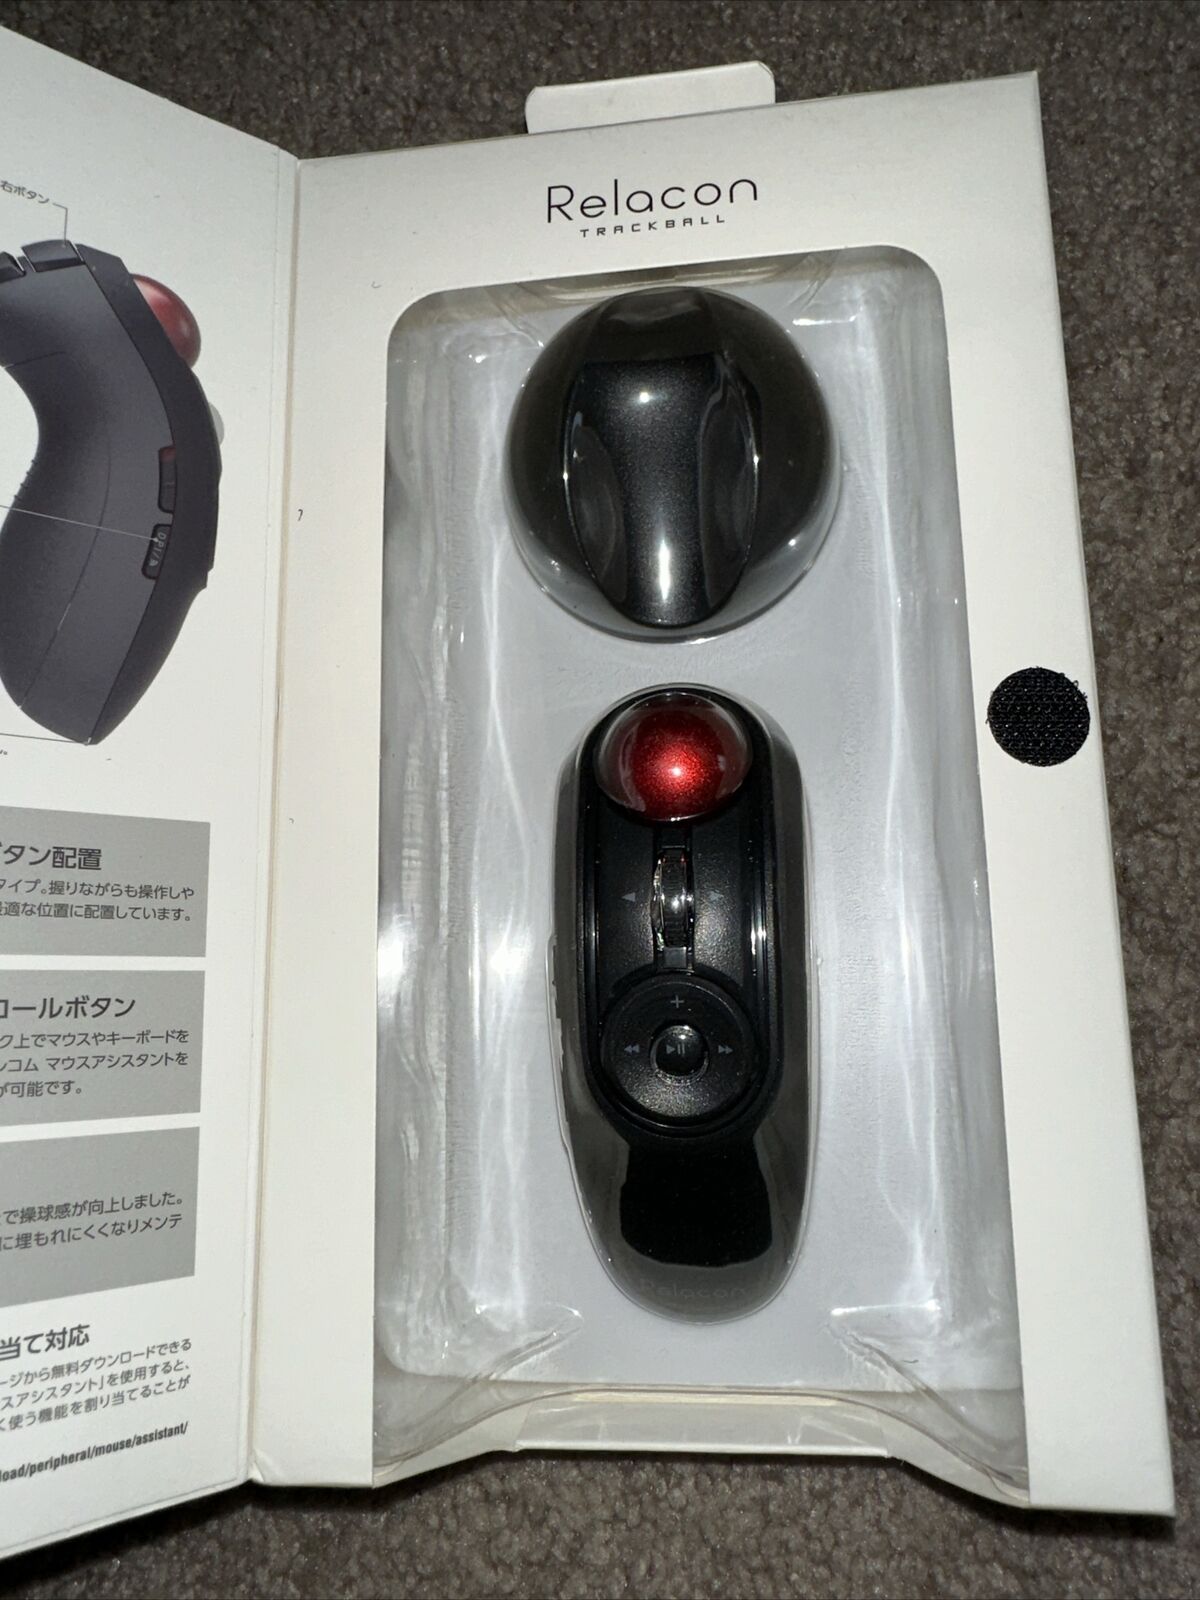 Elecom Trackball Mouse Handy Type Relacon With Media Control Button